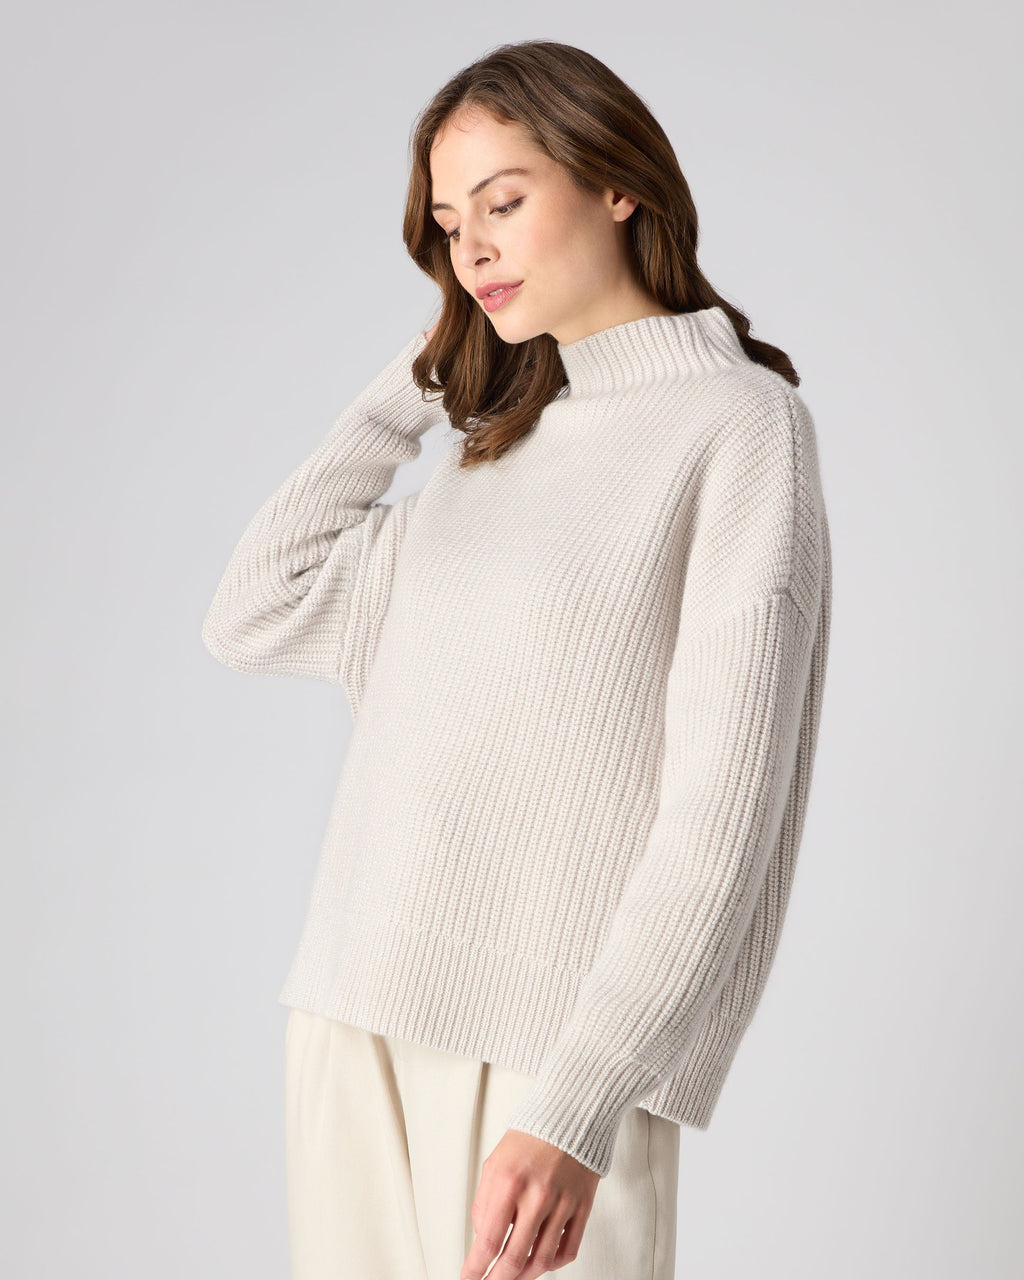 White Cashmere Turtleneck Sweaters